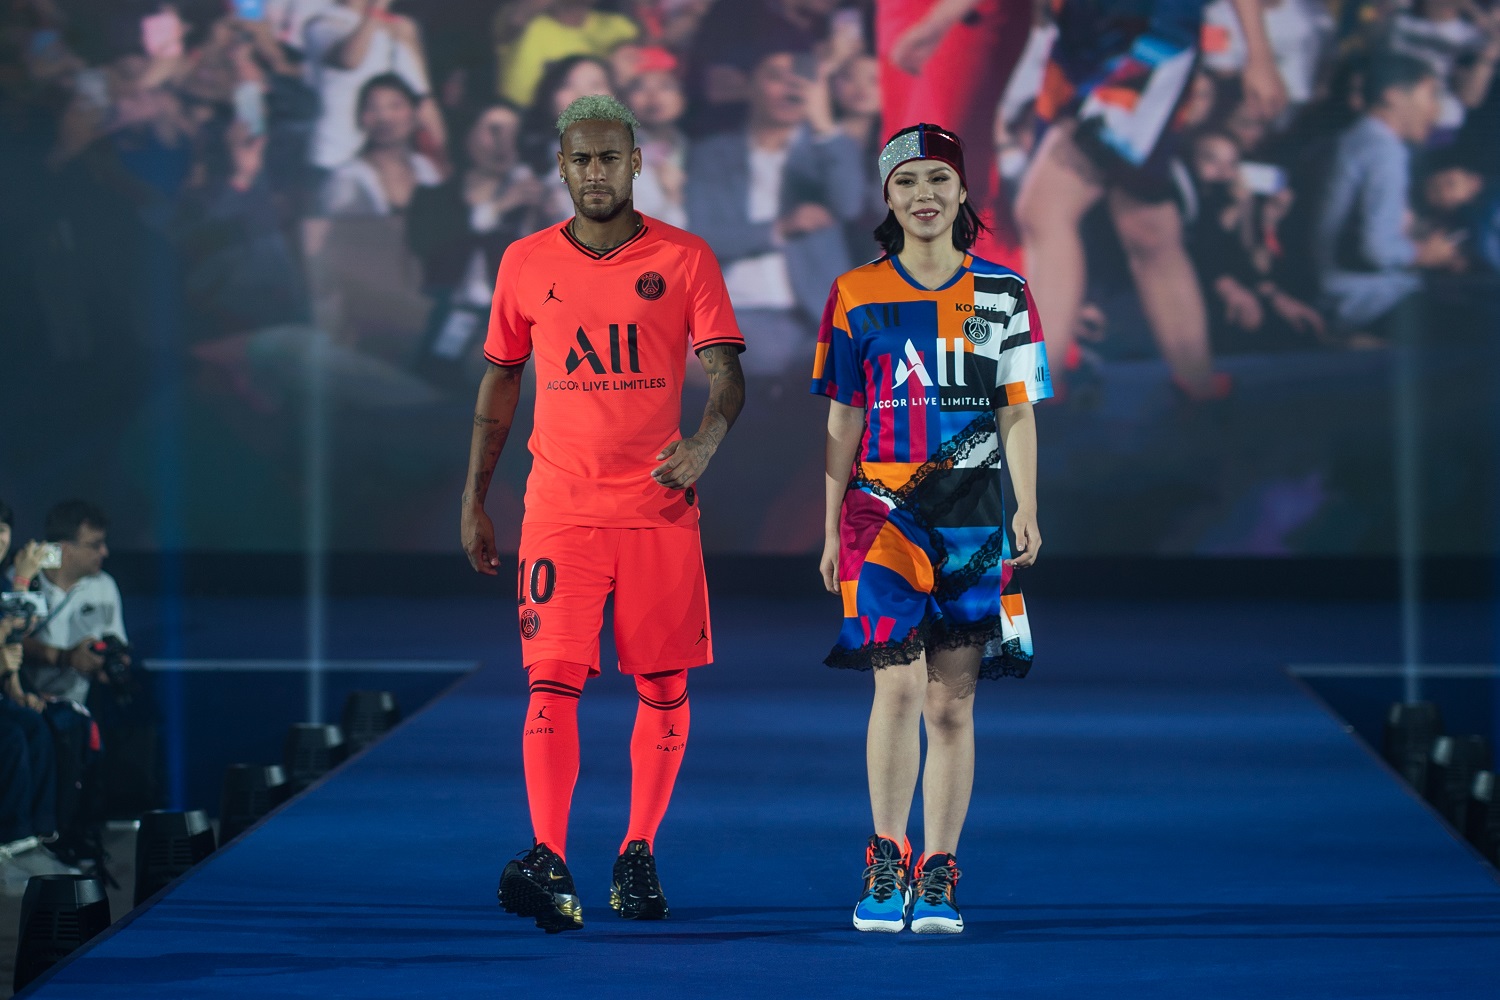 Maillot PSG Authentic Third Homme Nike Jordan 2019/2020 - Coupe ajustée -  Col en V - Orange Orange - Cdiscount Sport